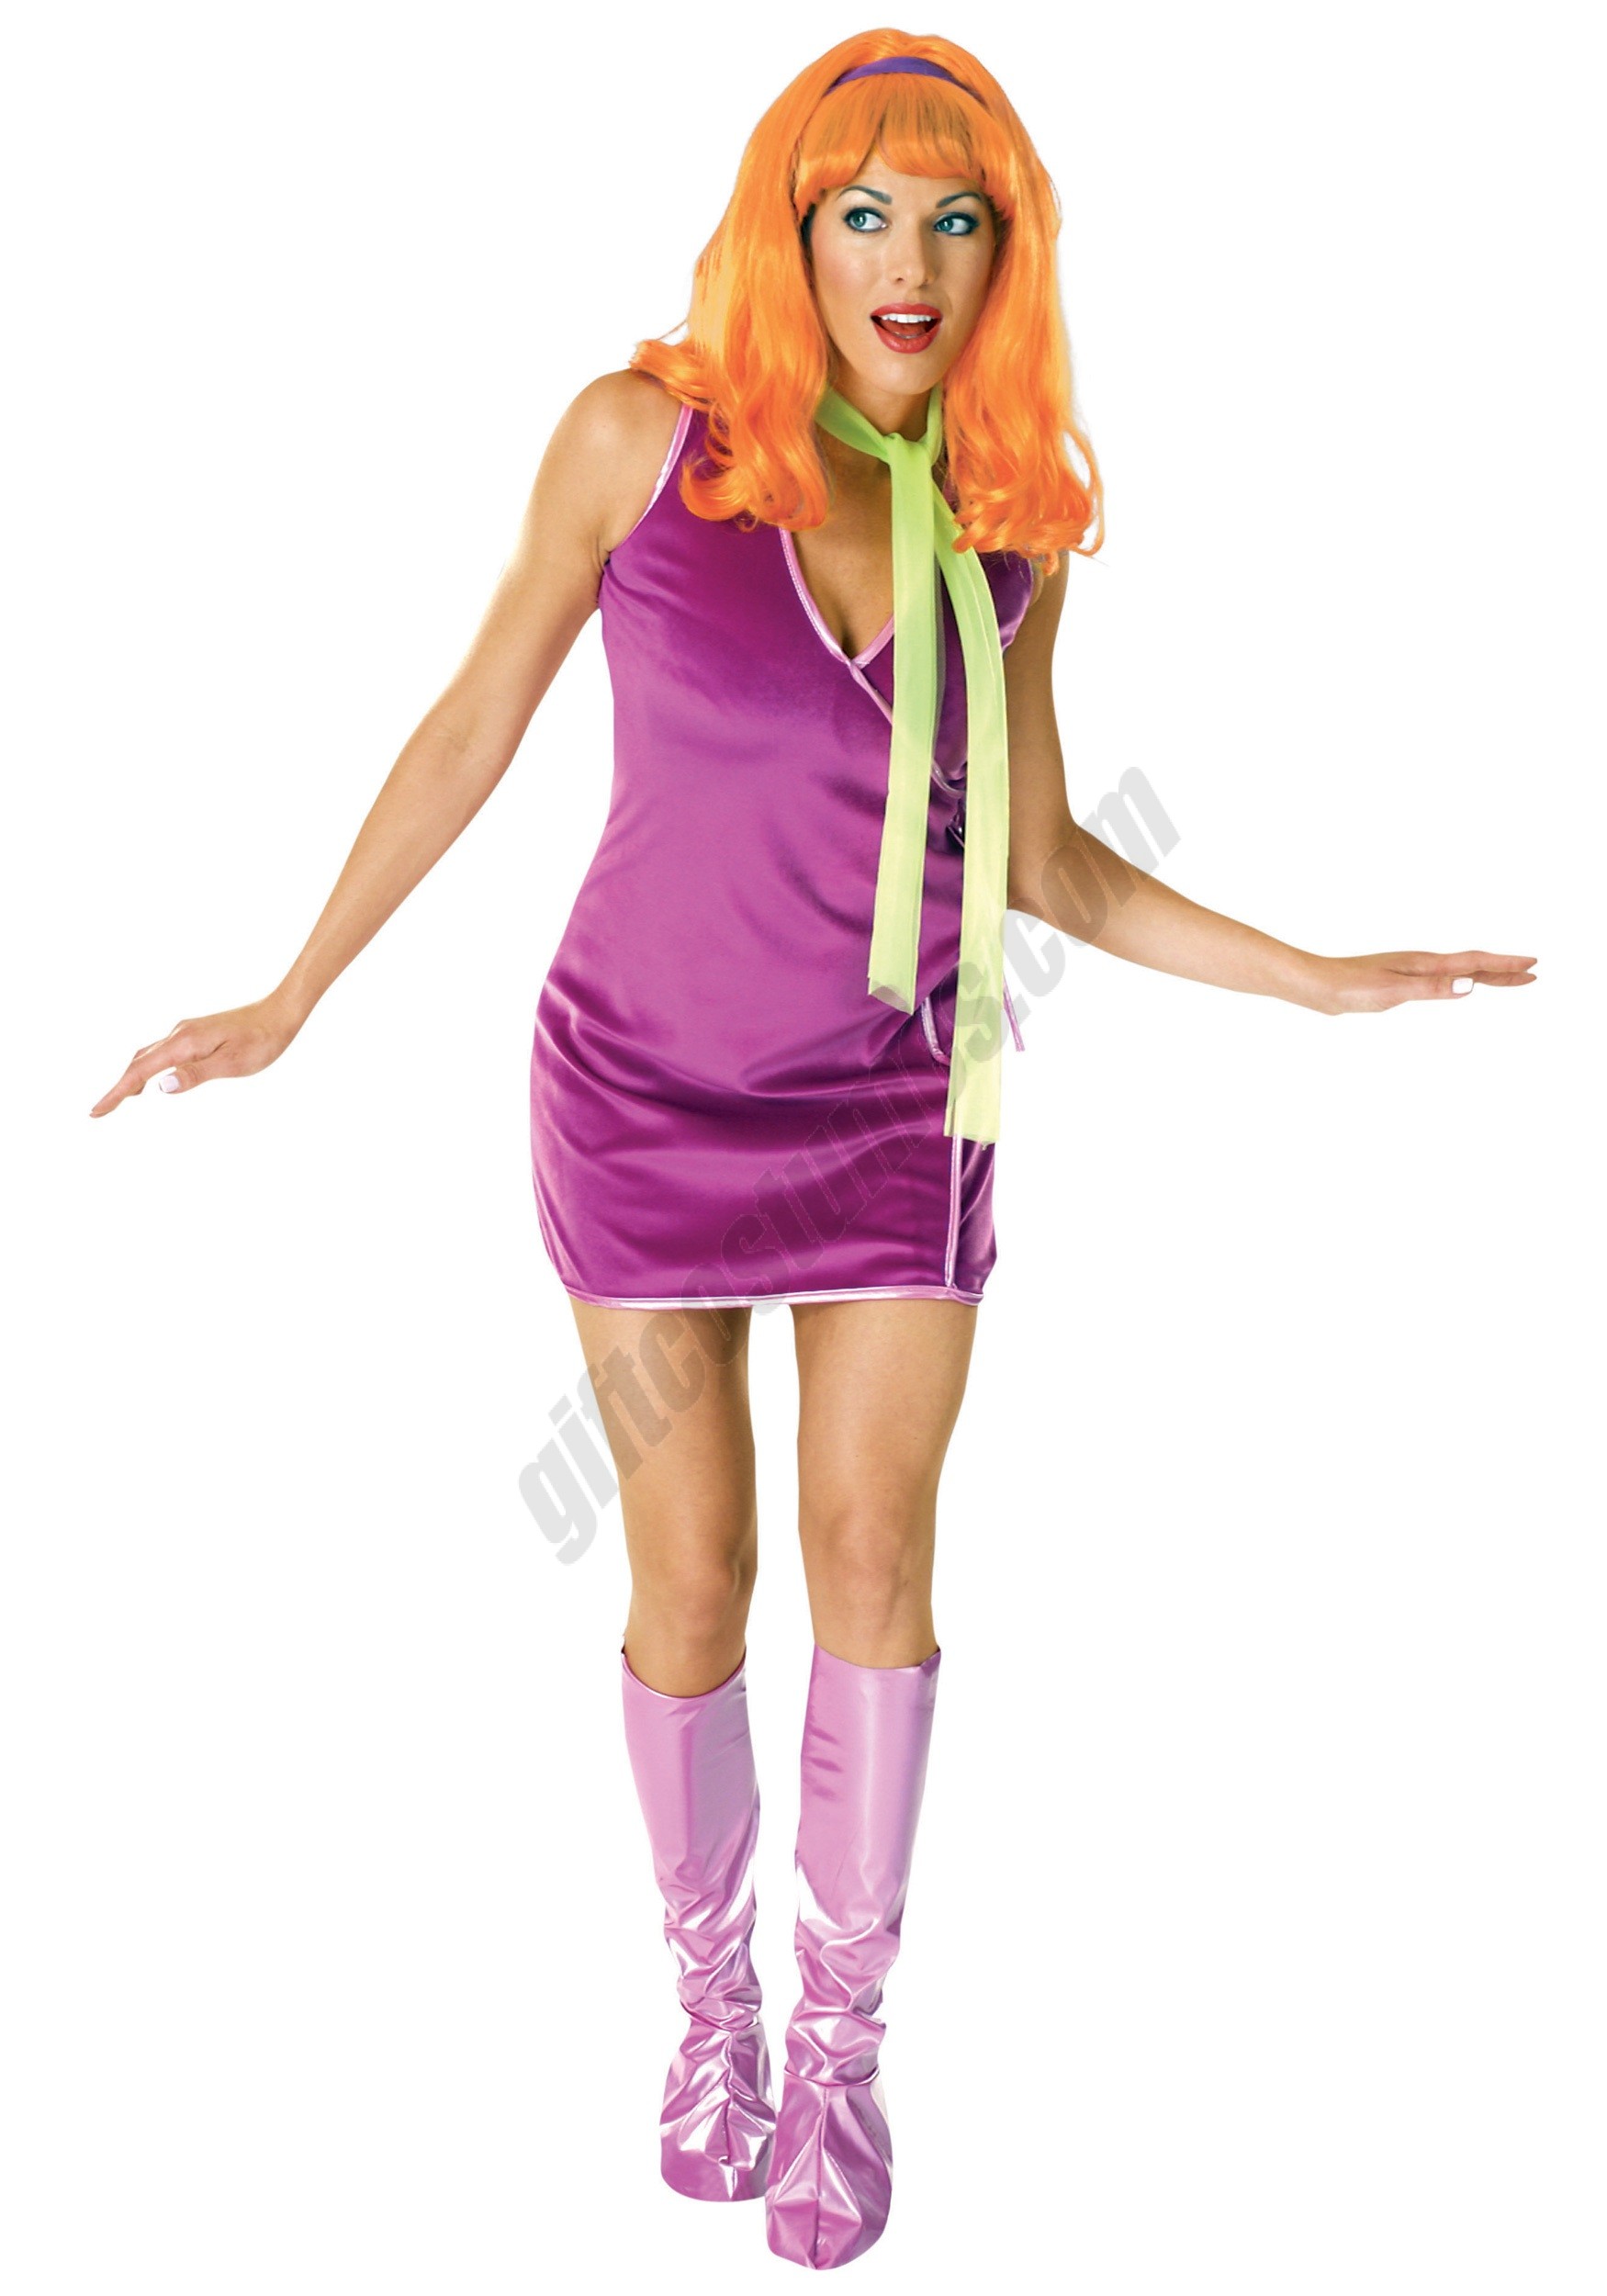 Adult Daphne Costume - Women's - Adult Daphne Costume - Women's